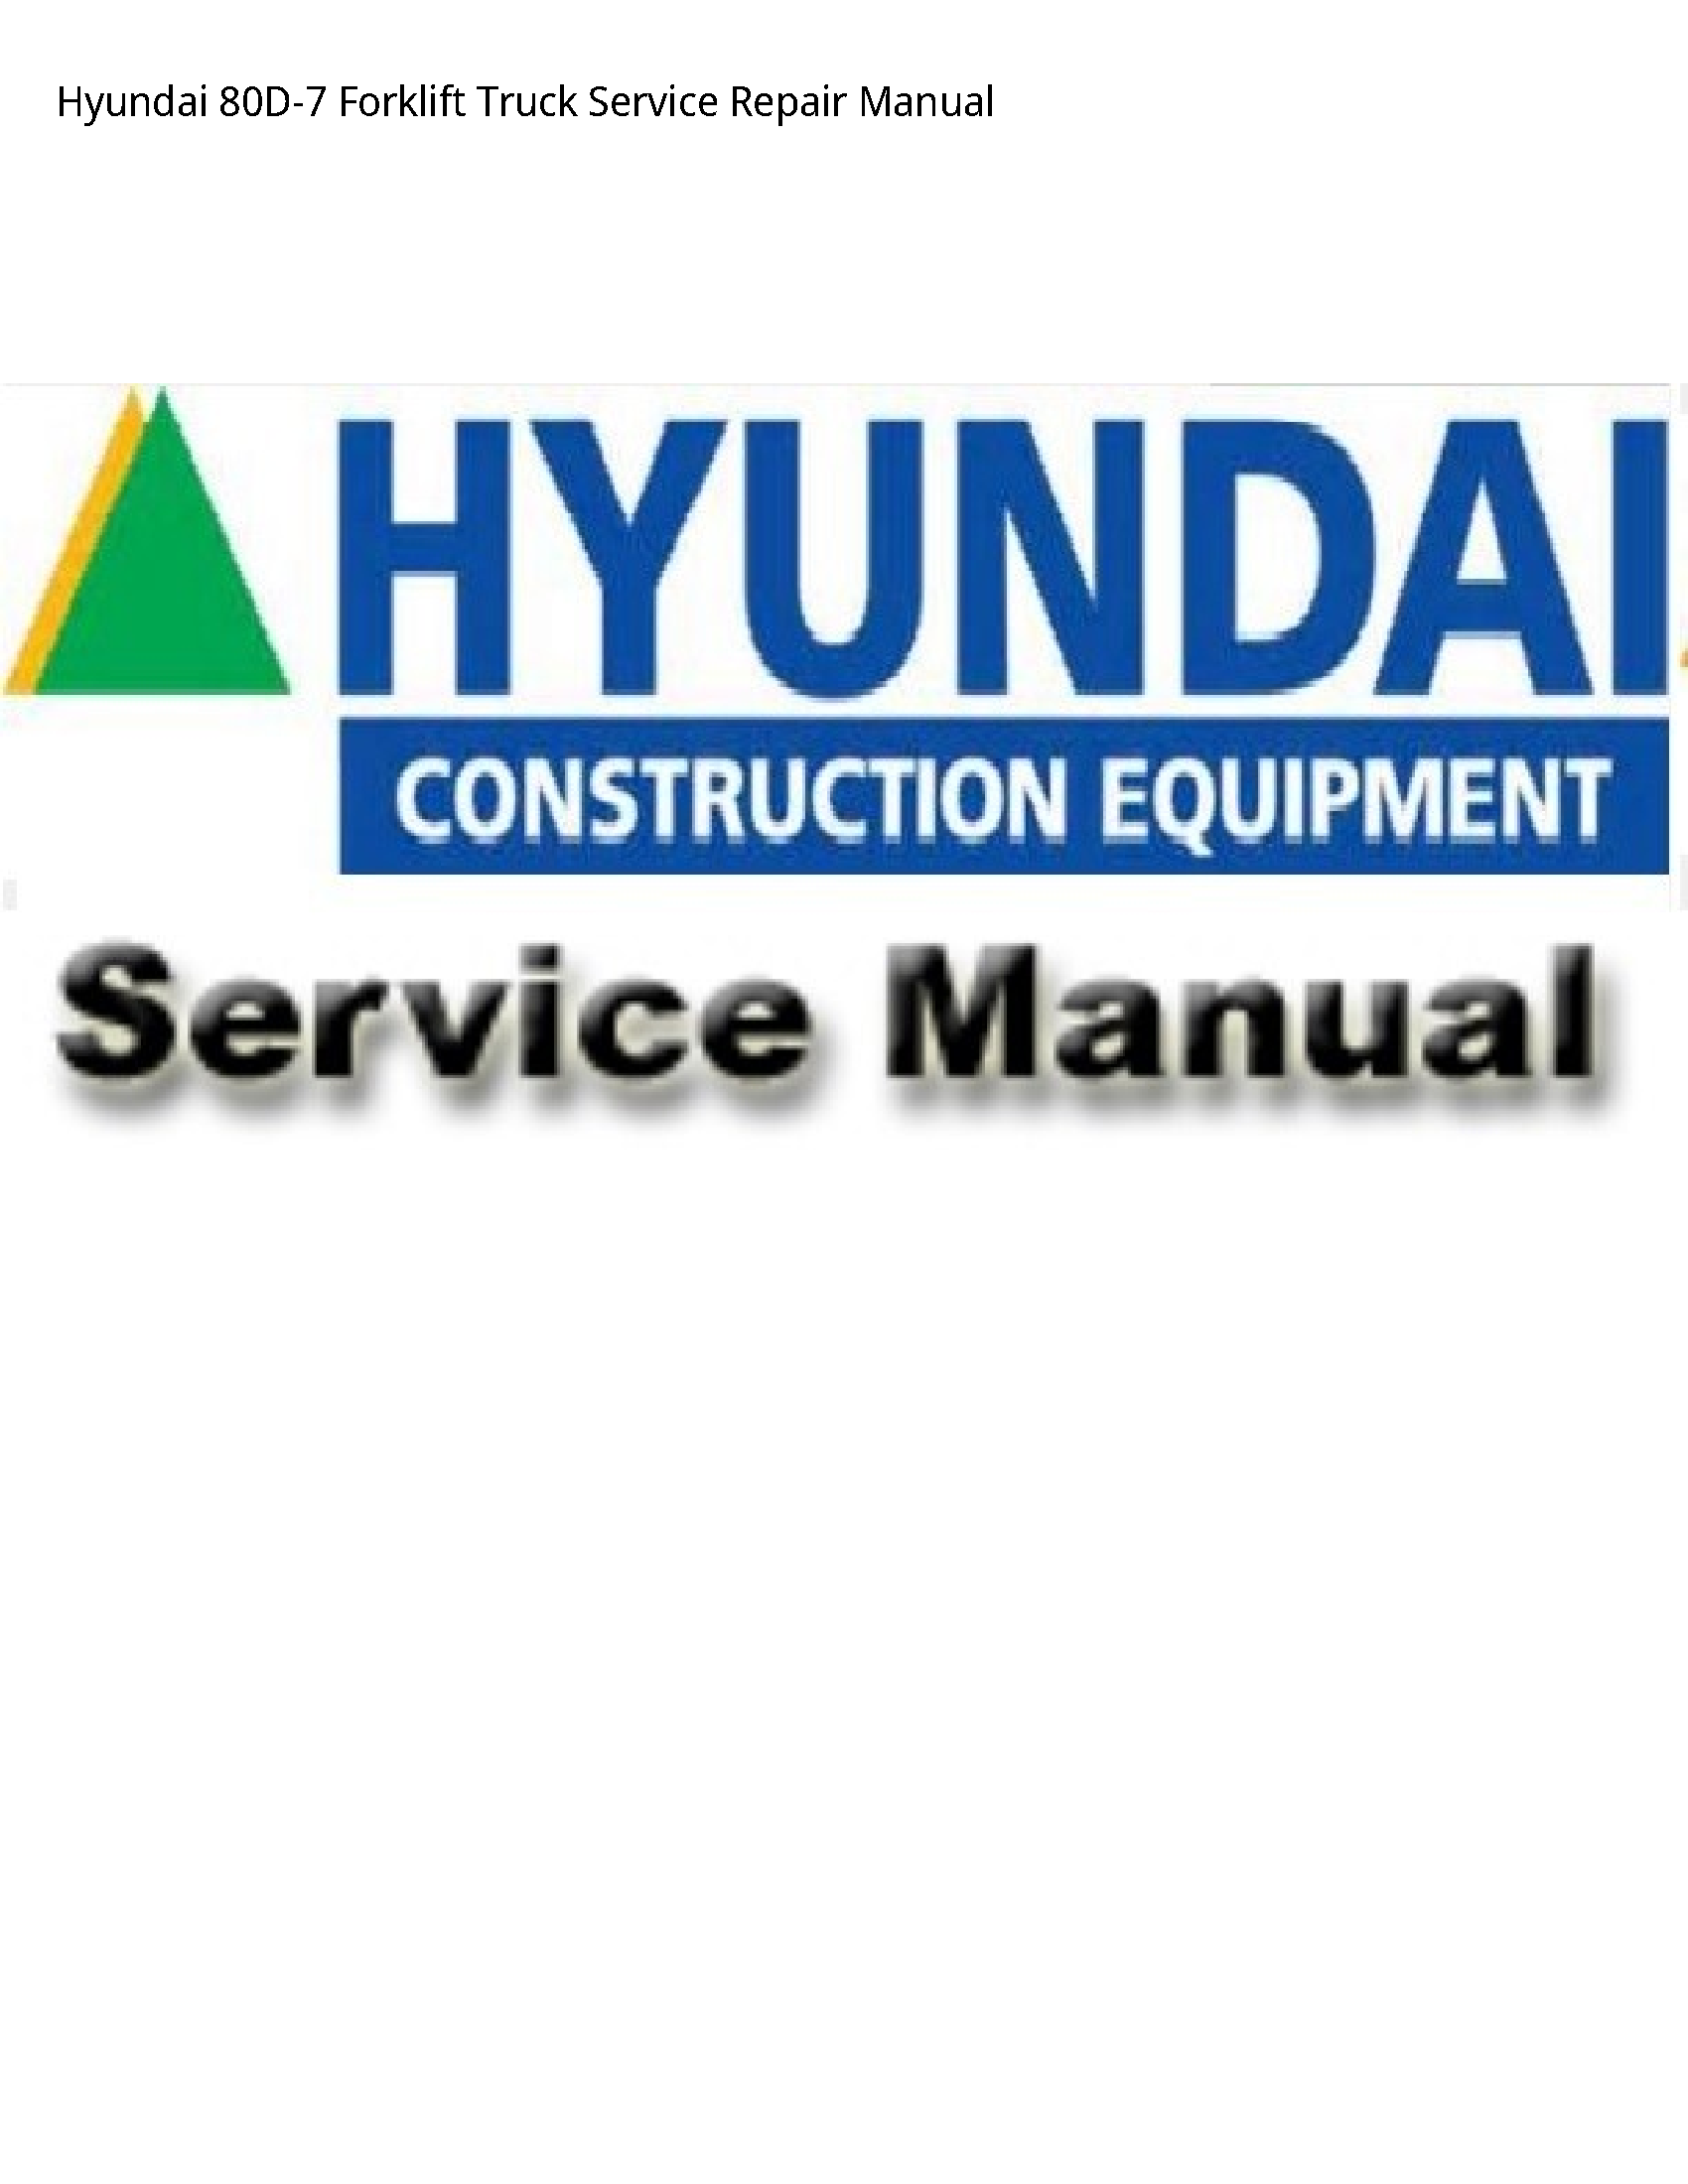 Hyundai 80D-7 Forklift Truck manual